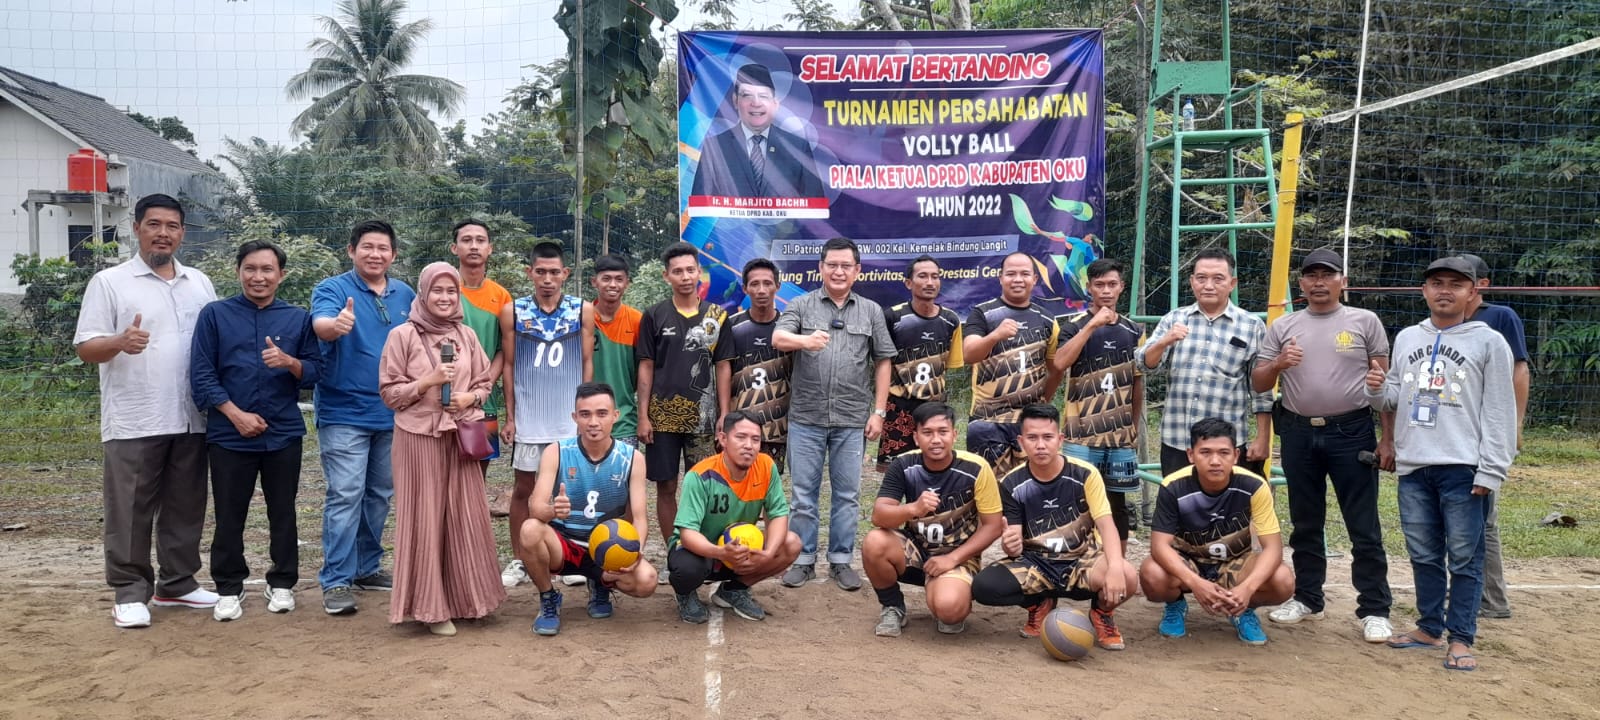 Perebutan Piala Ketua DPRD OKU, 32 Tim Ikuti Turnamen Persahabatan Volly Ball